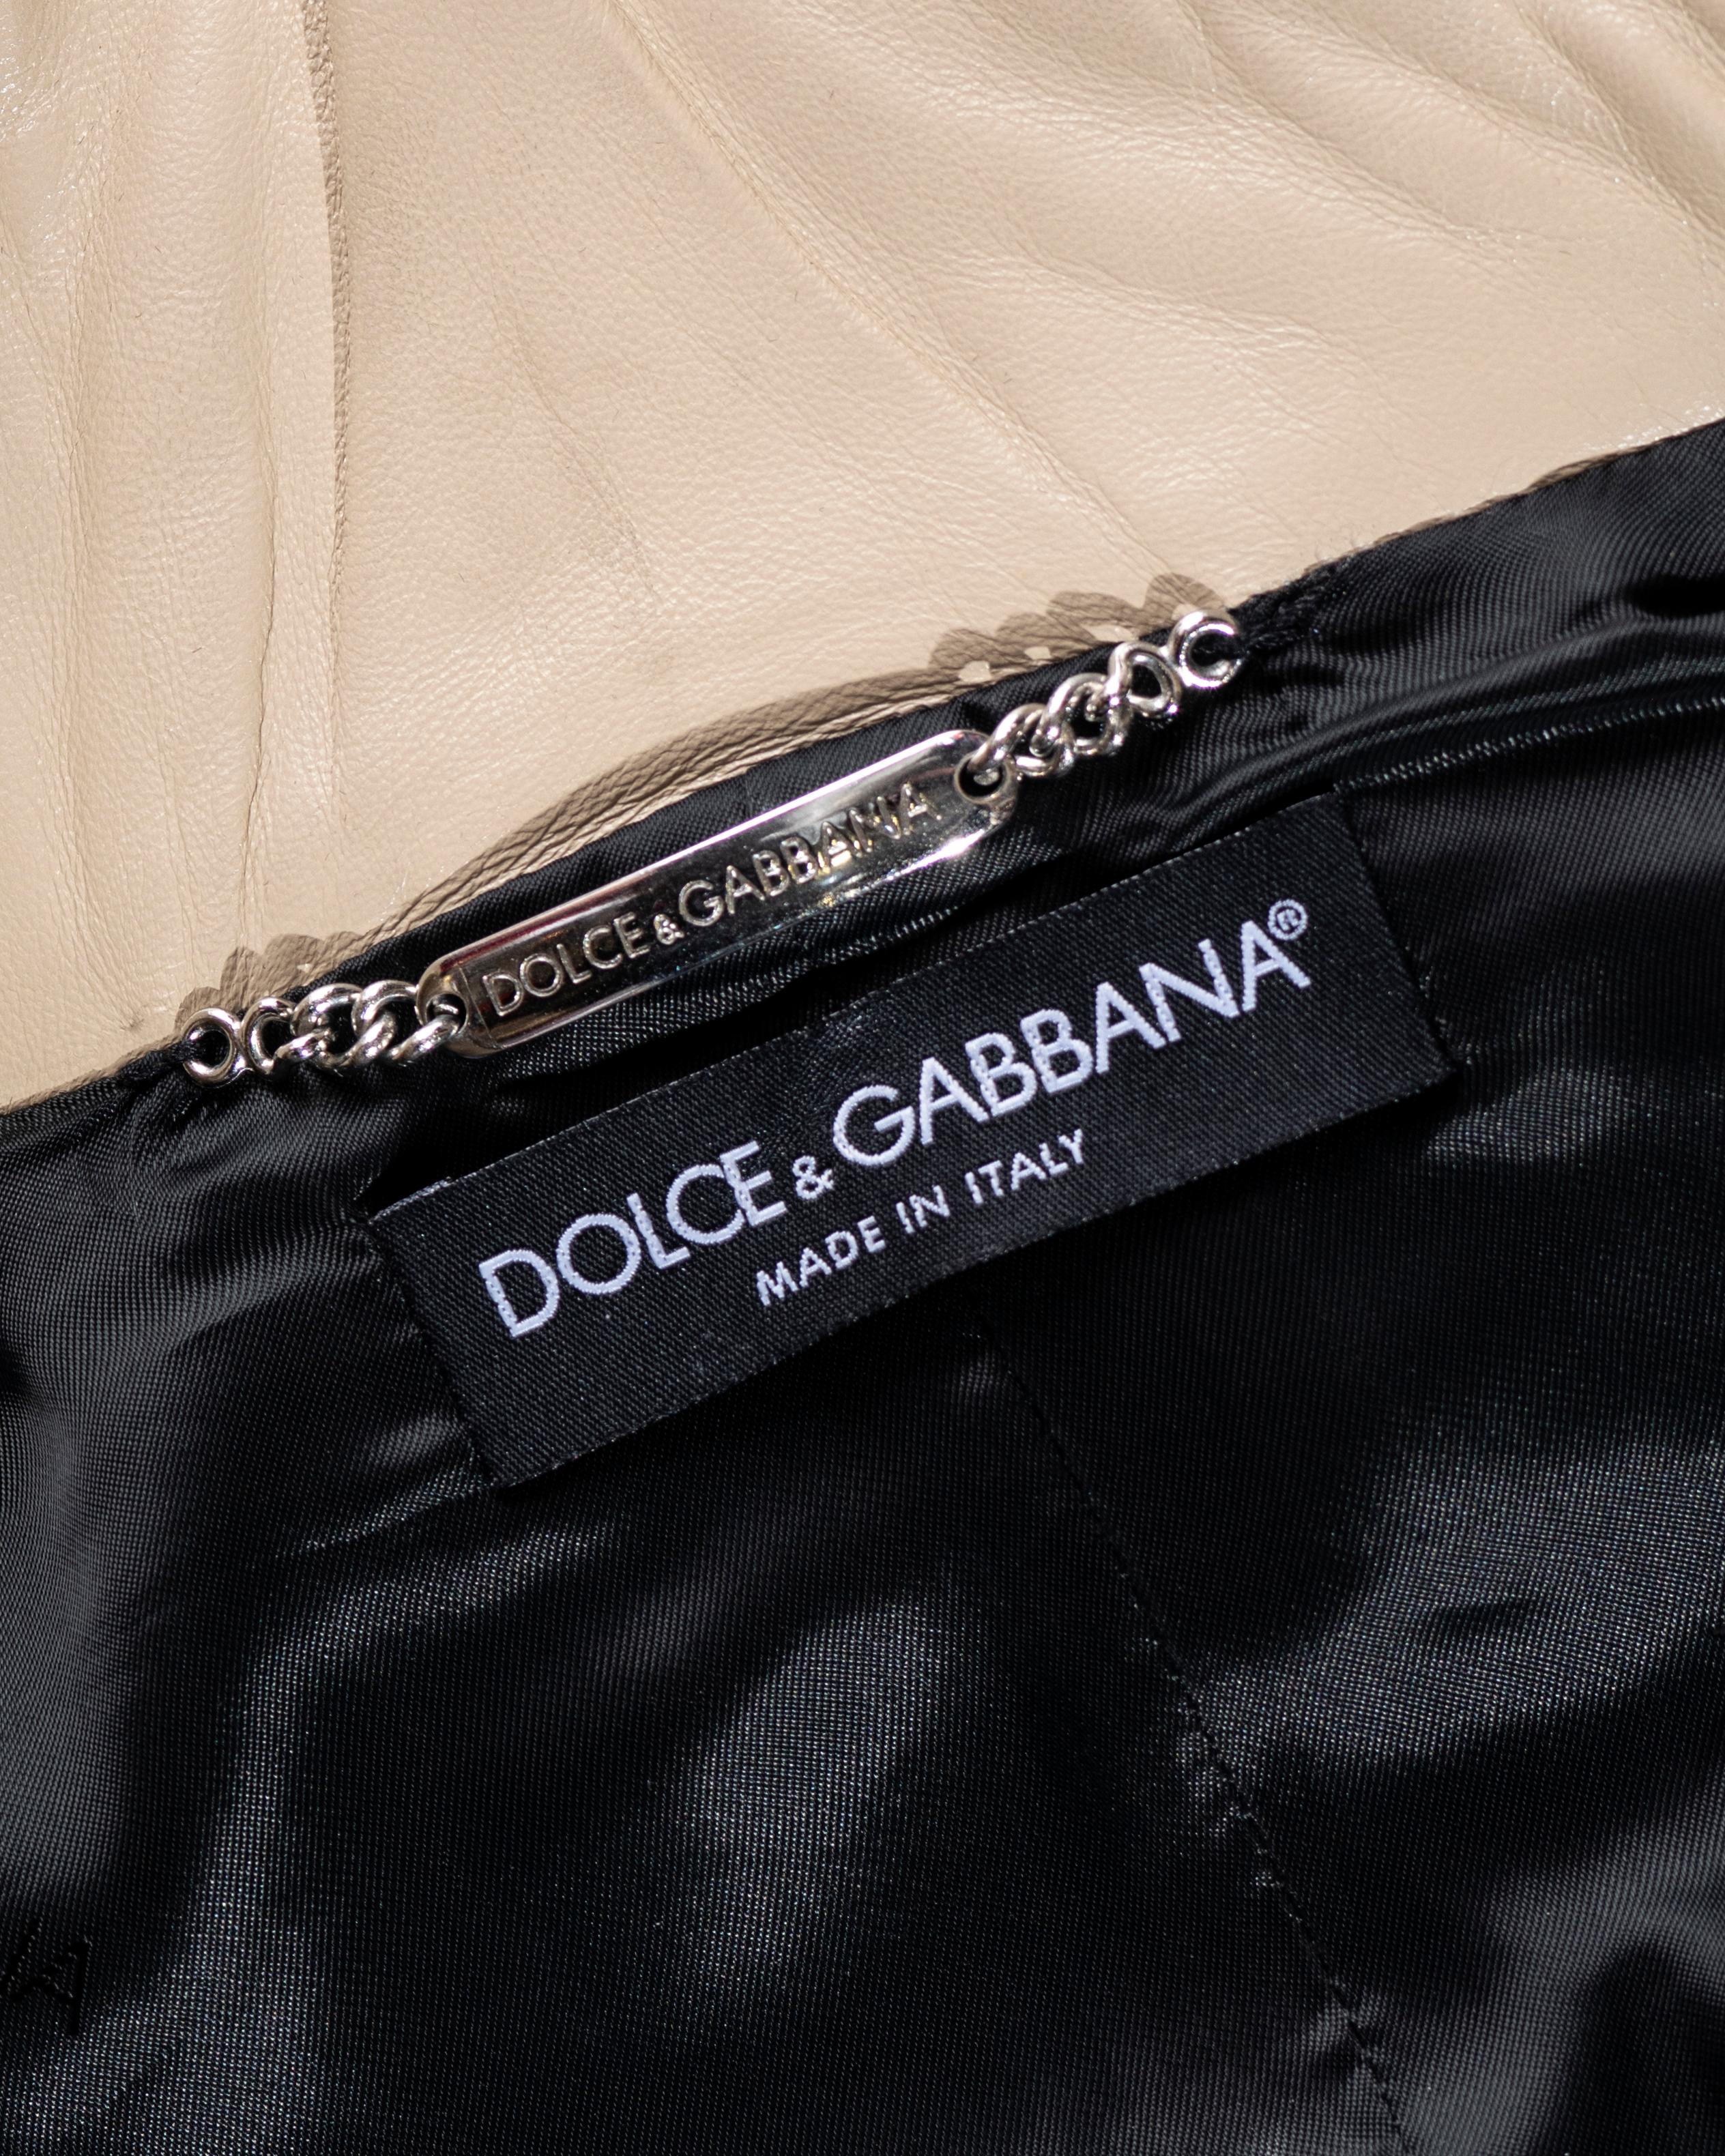 Dolce & Gabbana cream lambskin leather jacket and mini skirt set, ss 2003 5